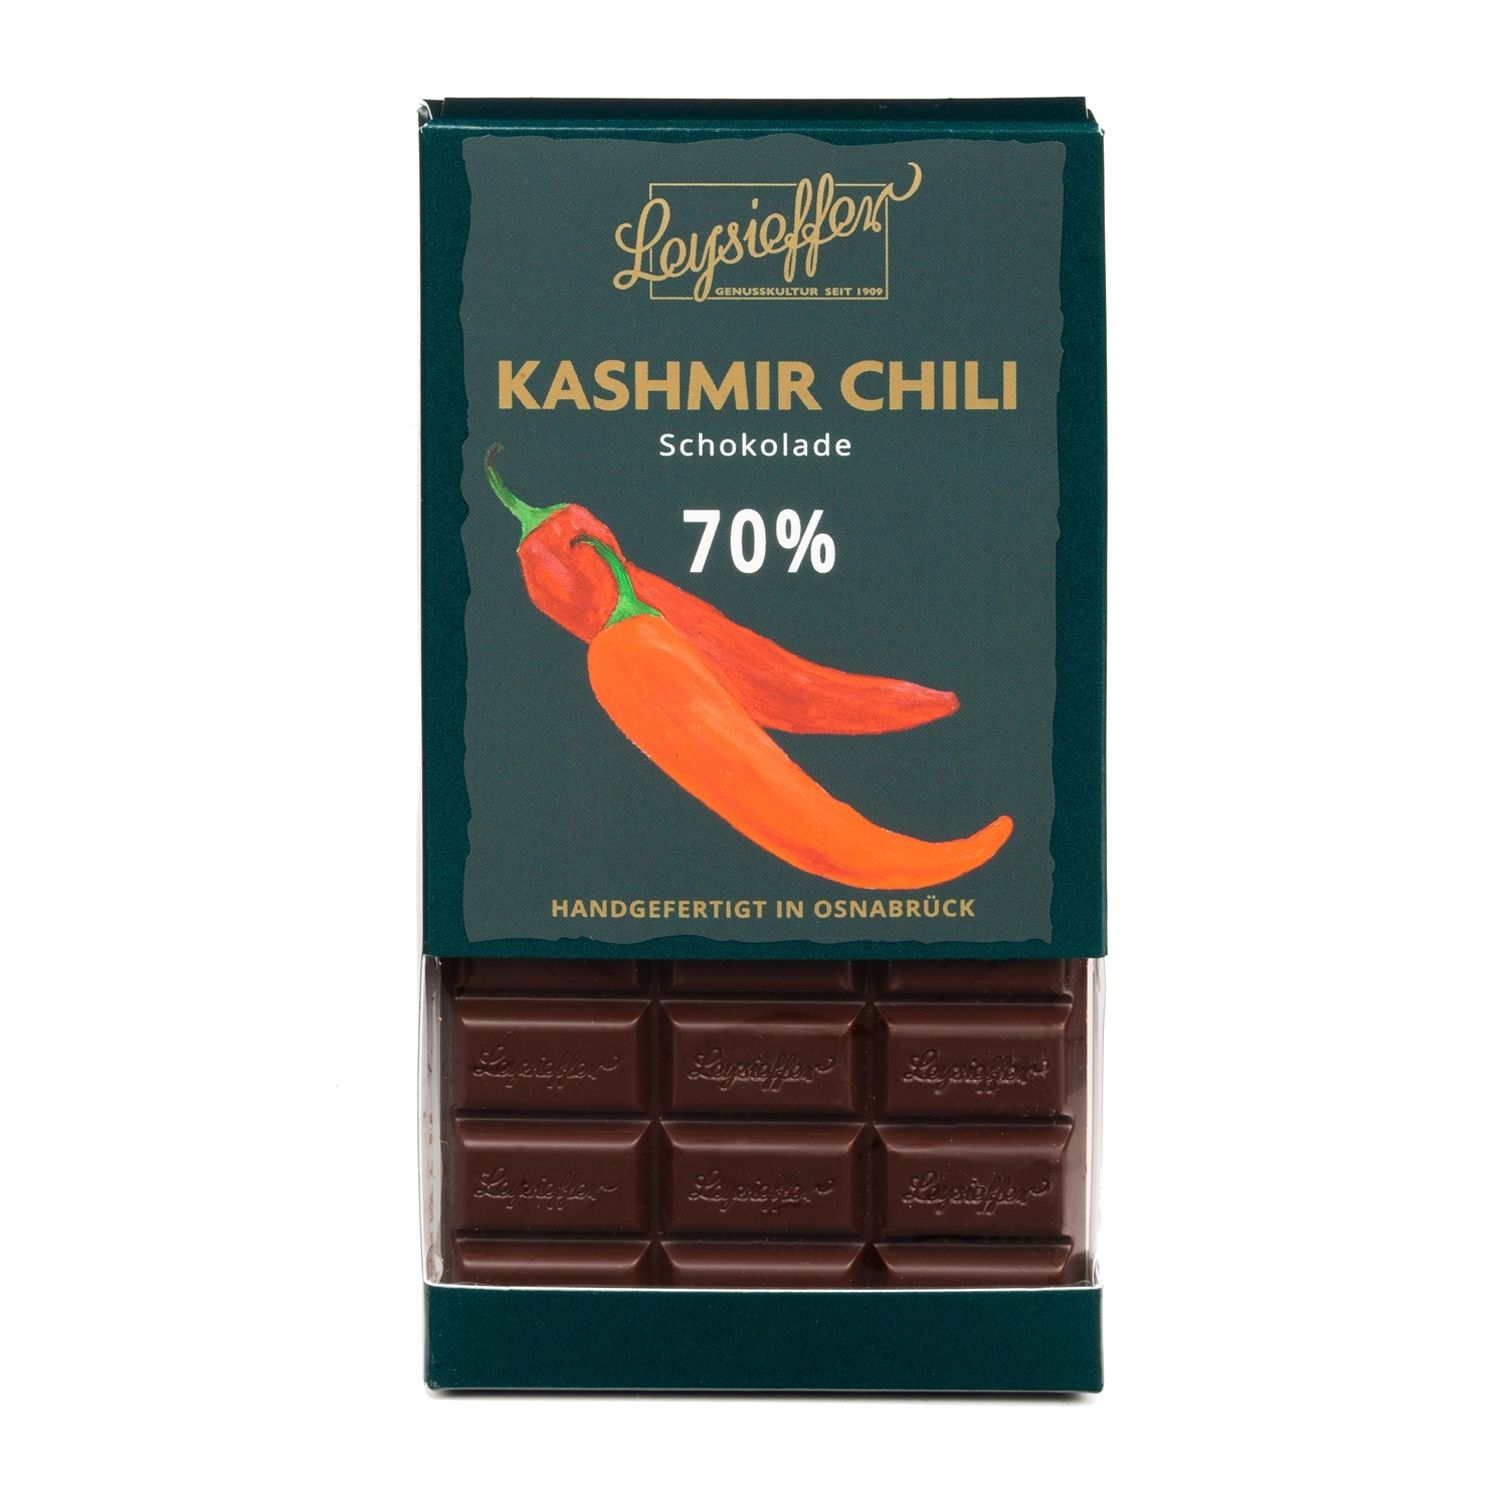 Vintage Chocolate 70% with Kashmir chilli